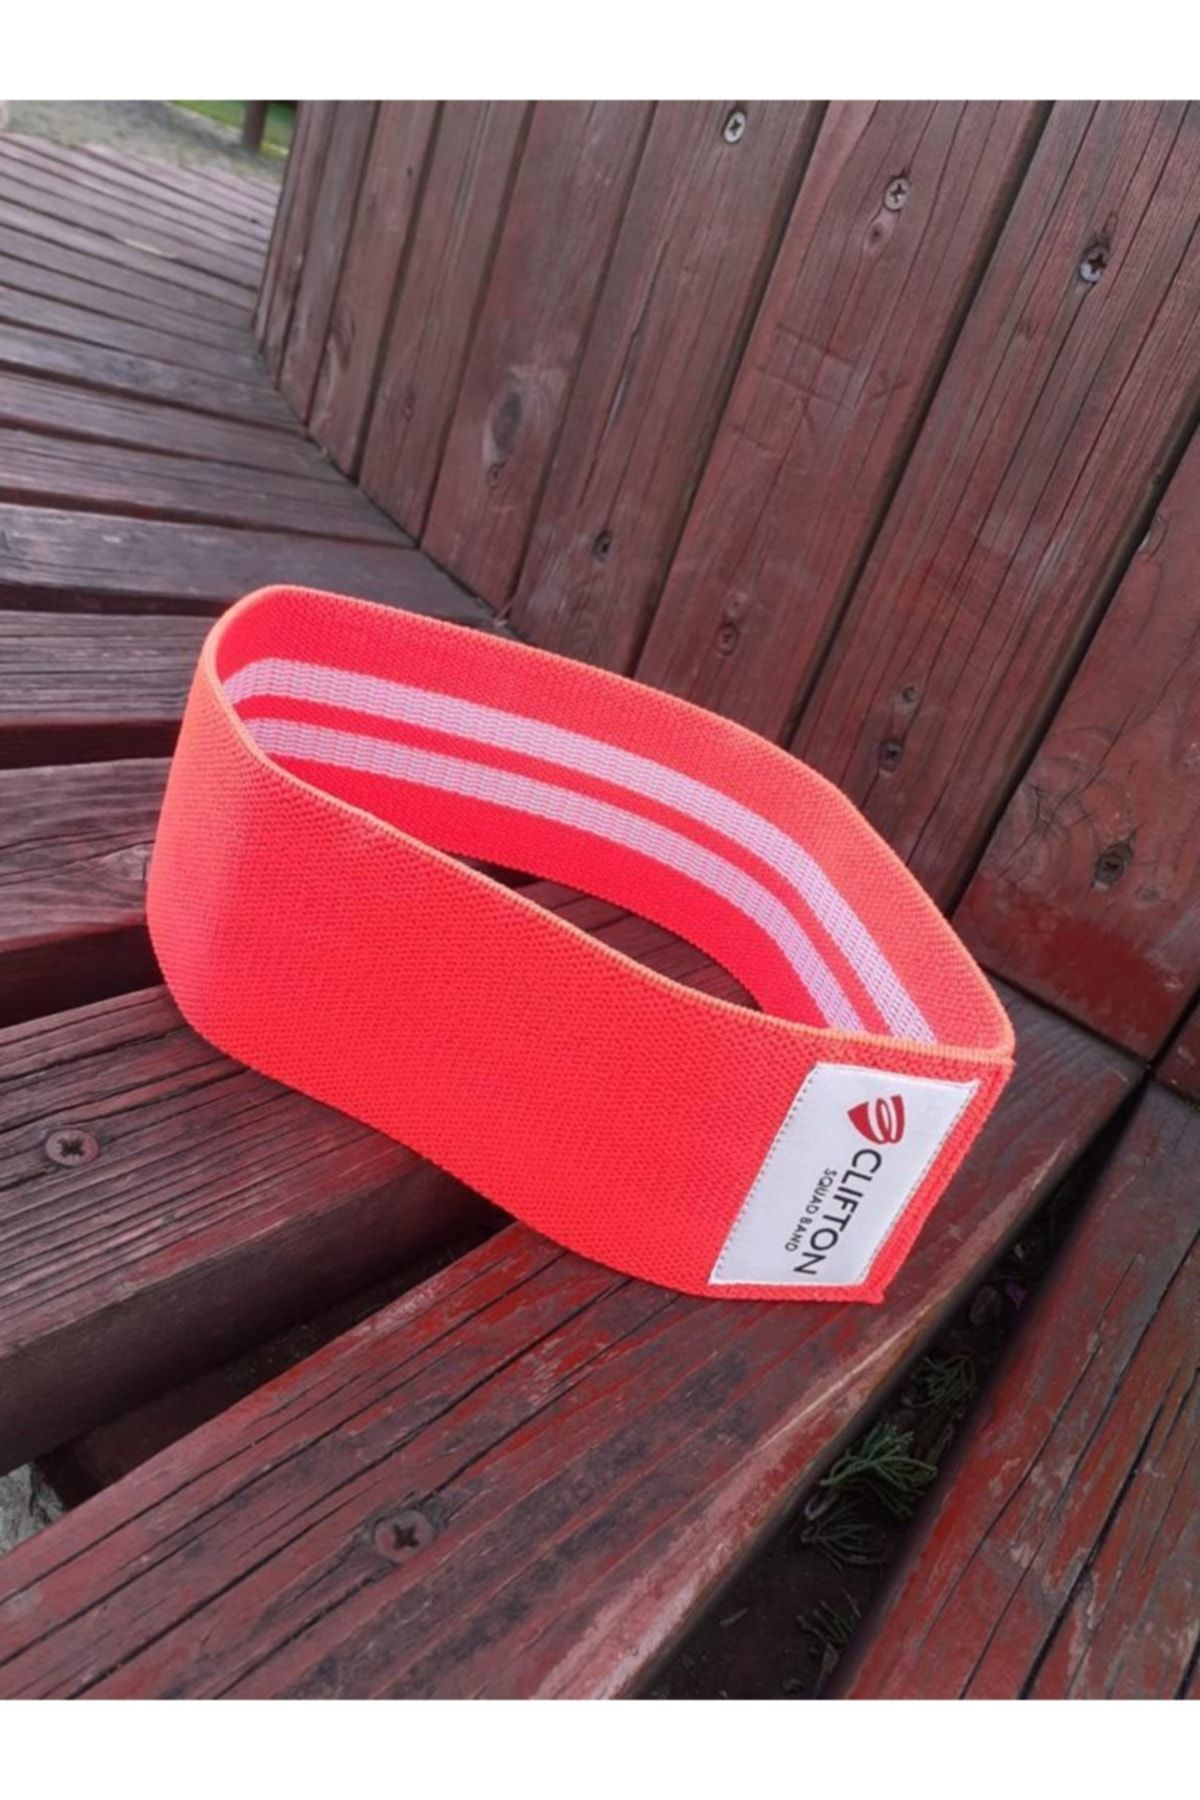 Clifton Loop Band Direnç Bandı Spor Egzersiz Aerobik Pilates Squat Lastiği Fitness Yoga Neon Kırmızı